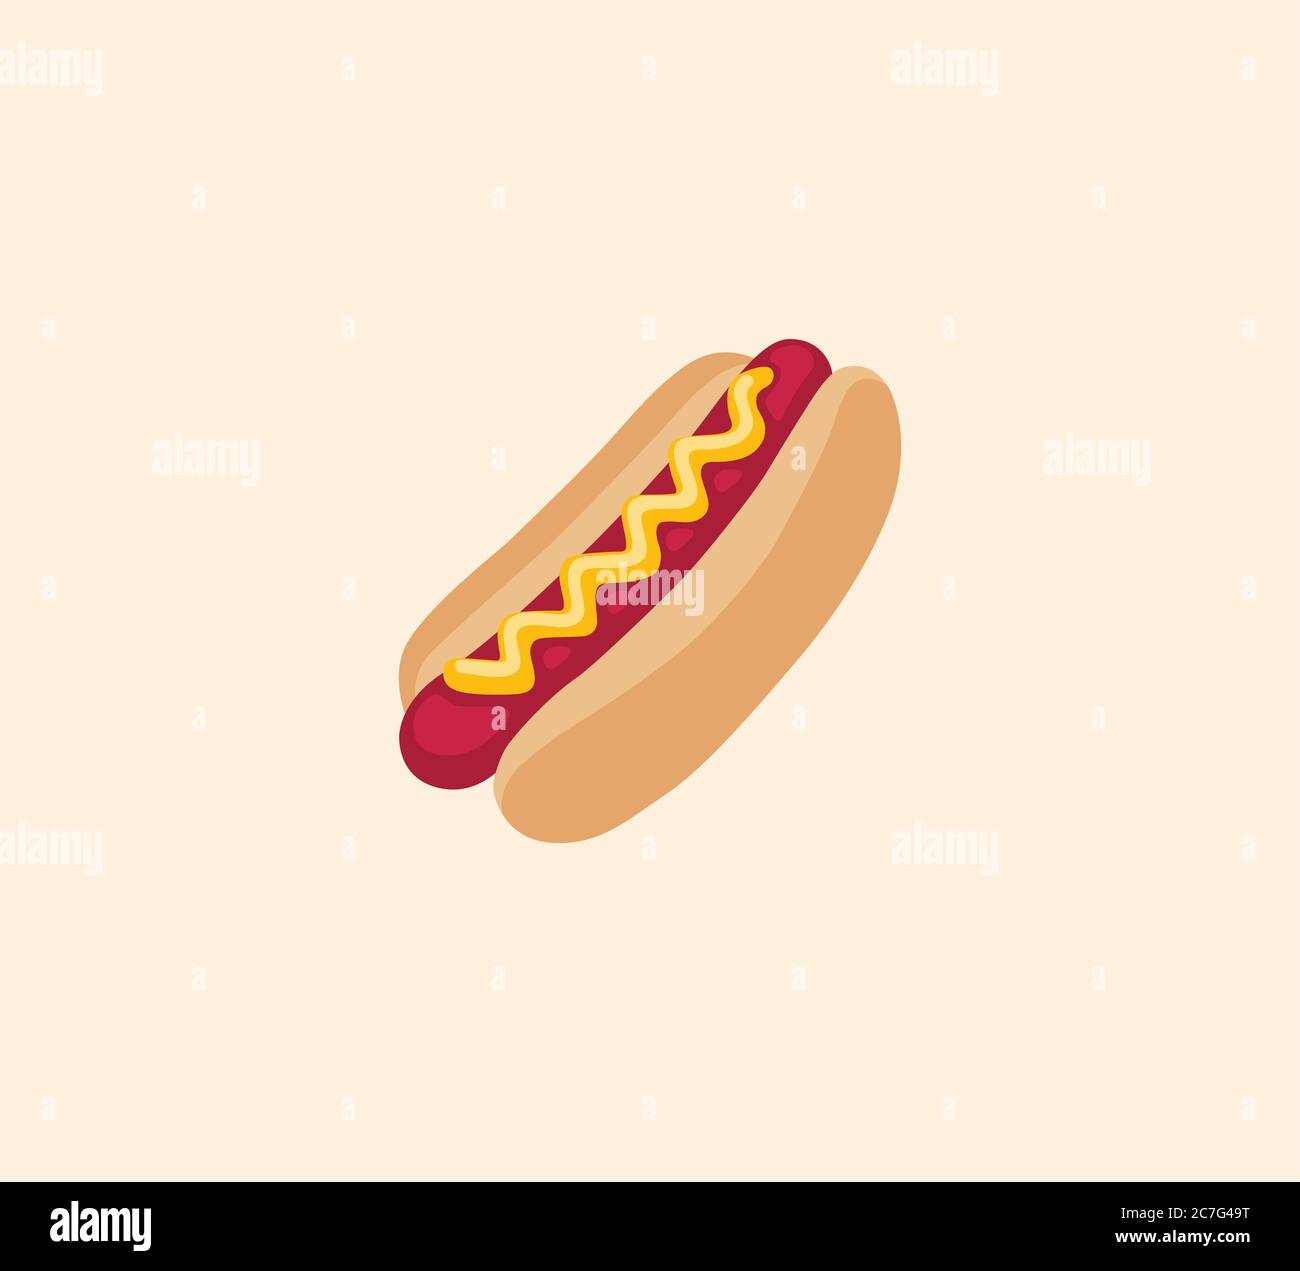 Hotdog vector isolated illustration. Hotdog icon Stock Vector